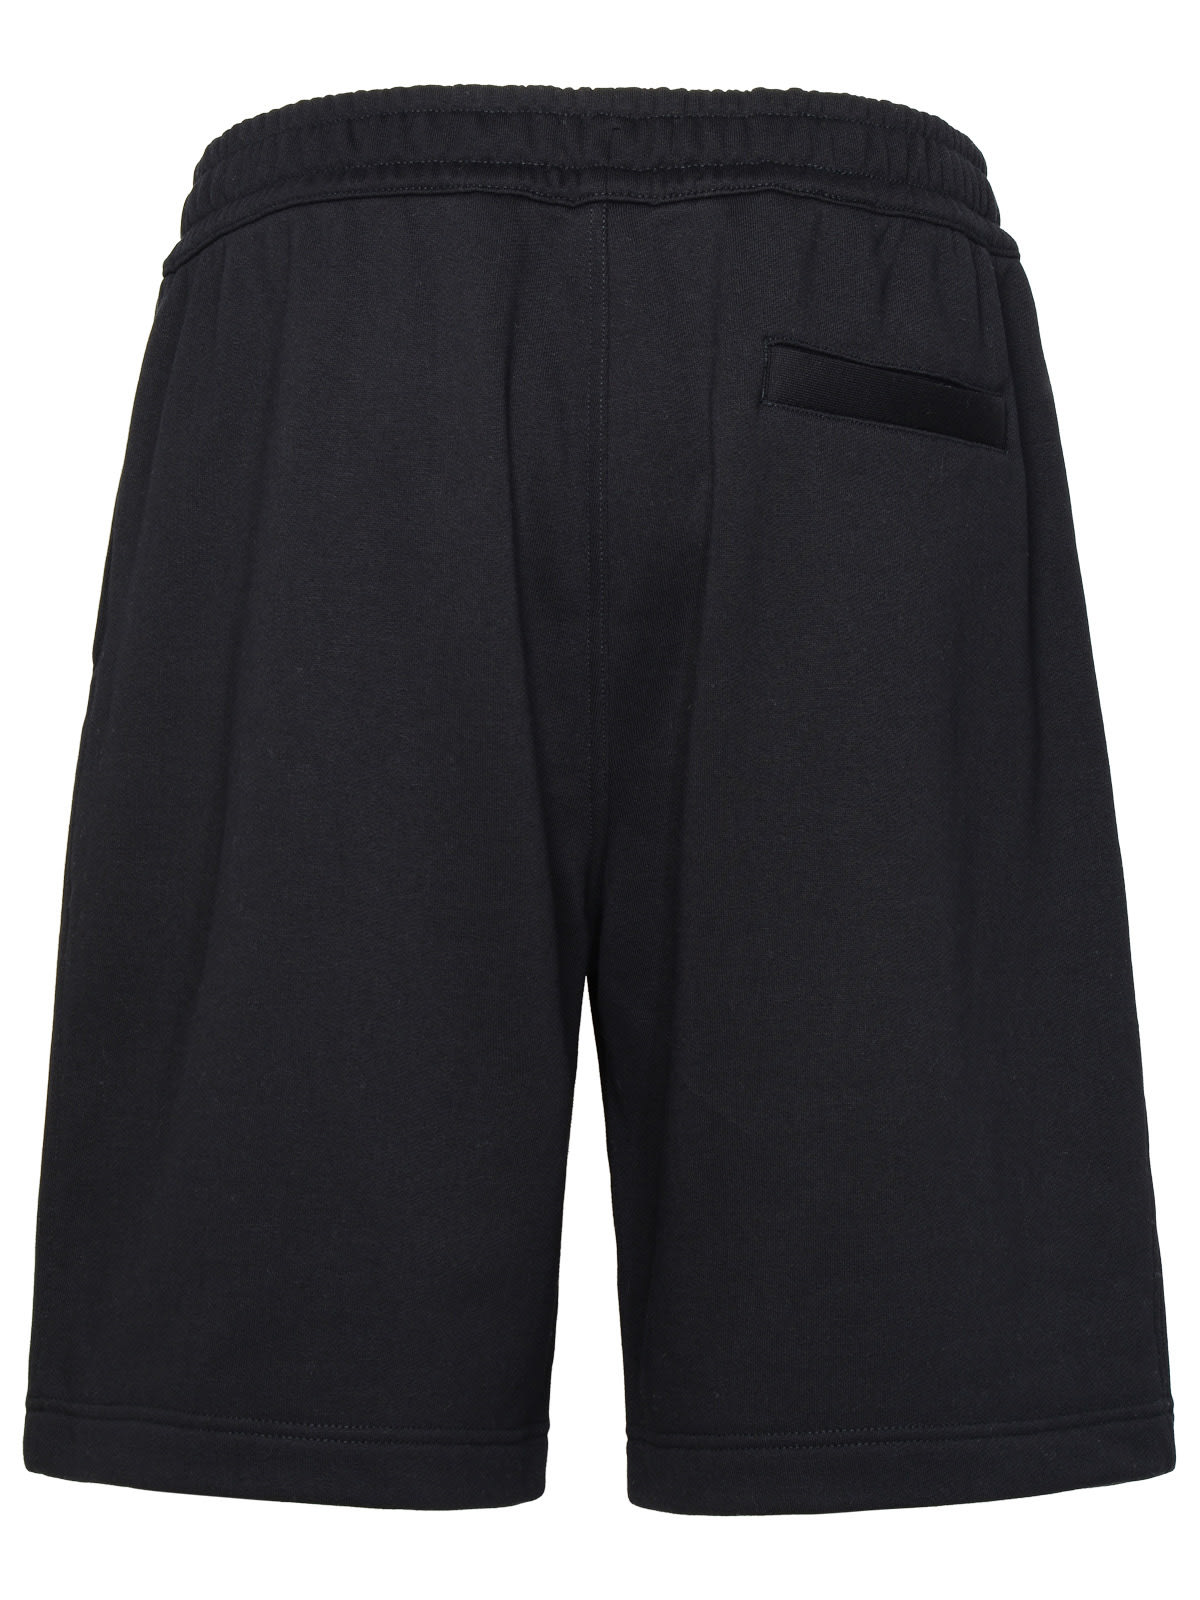 Shop Burberry Raphael Black Cotton Bermuda Shorts